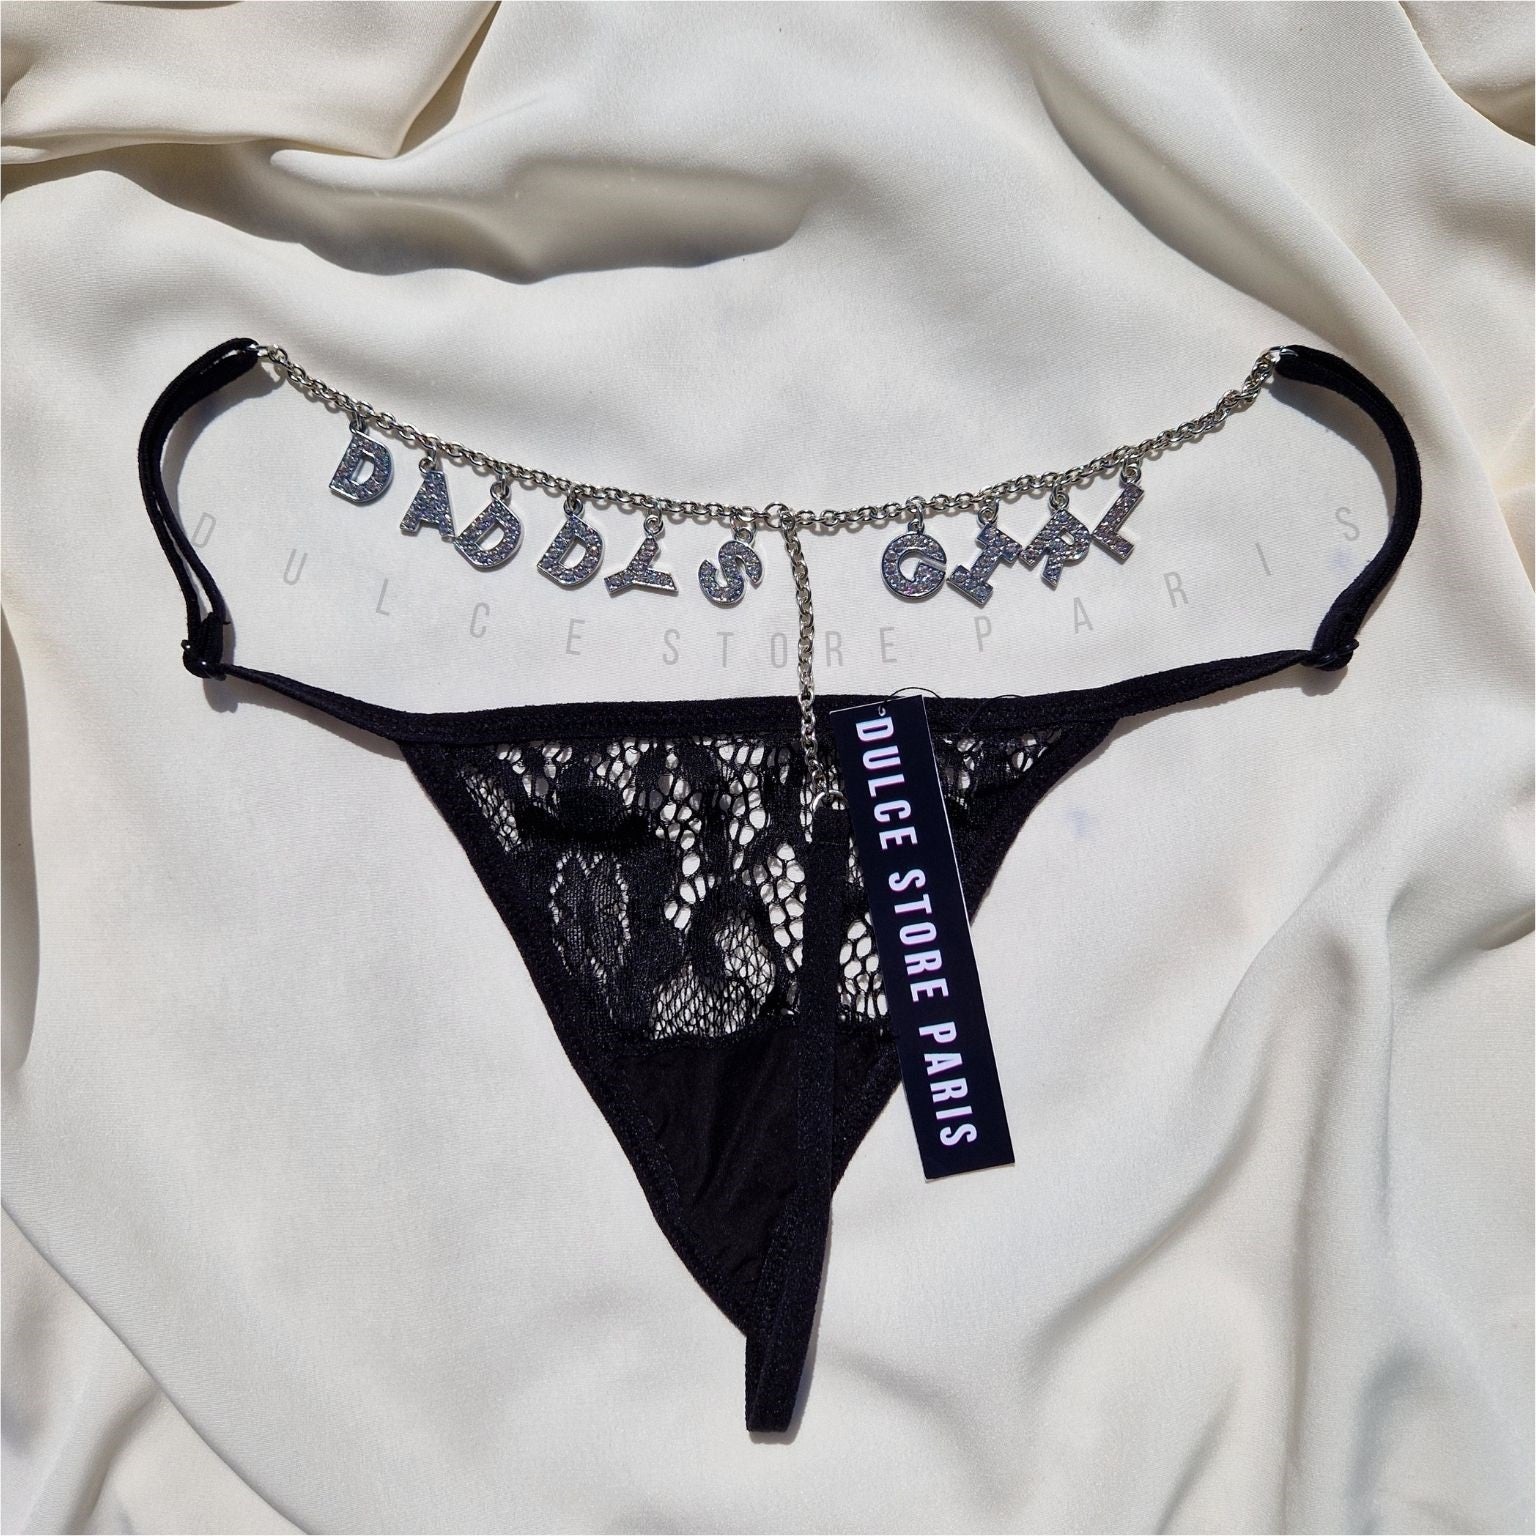 Property of Custom Name Thong Underwear - Basic White Thong